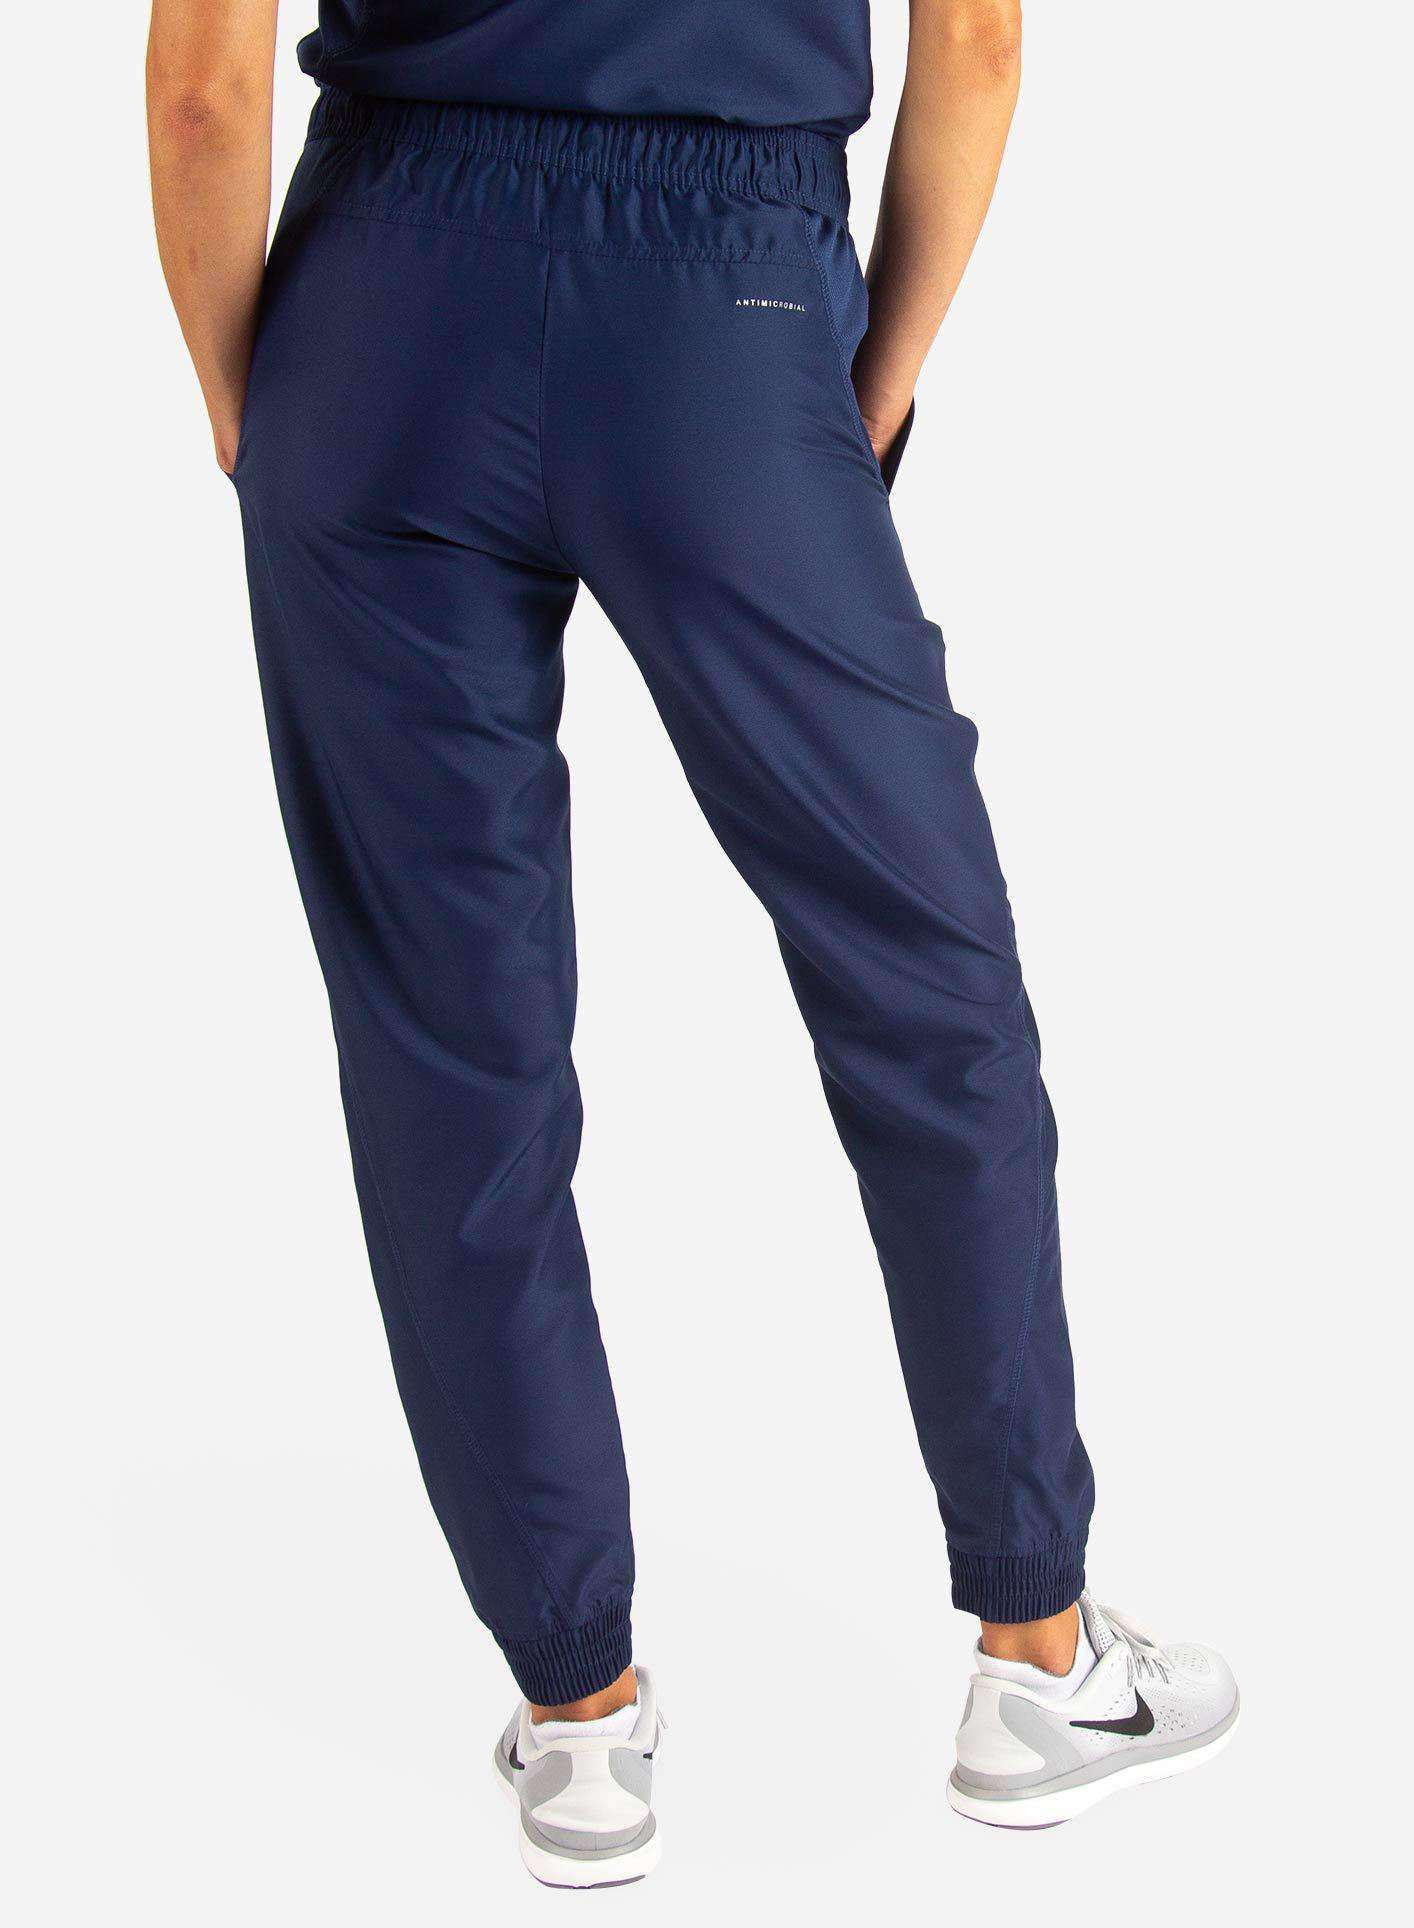 Women's Jogger Scrub Pants in navy-blue